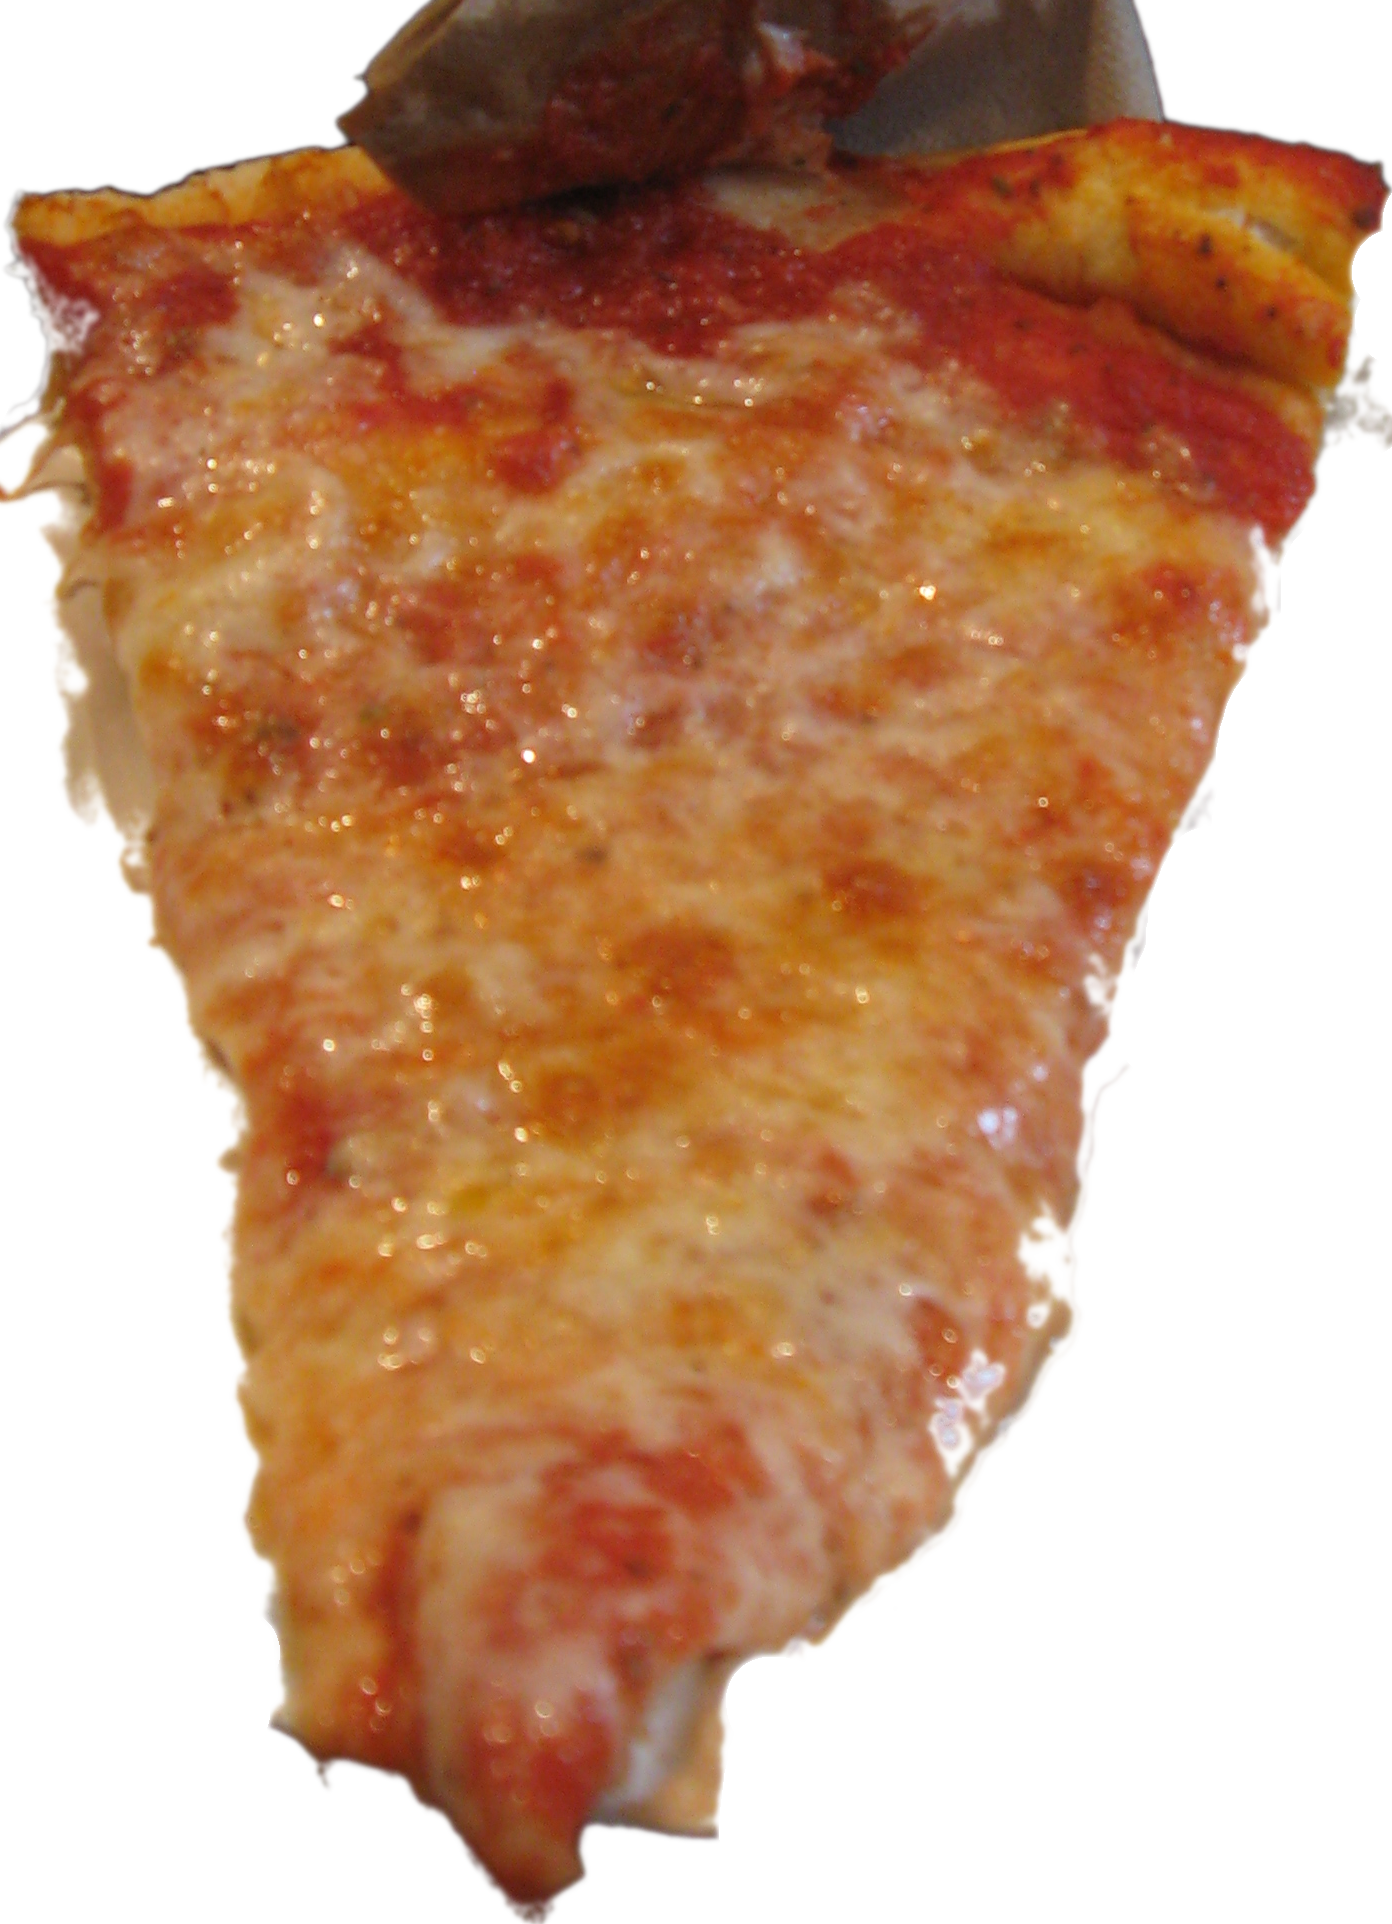 A delicious slice of pizza.